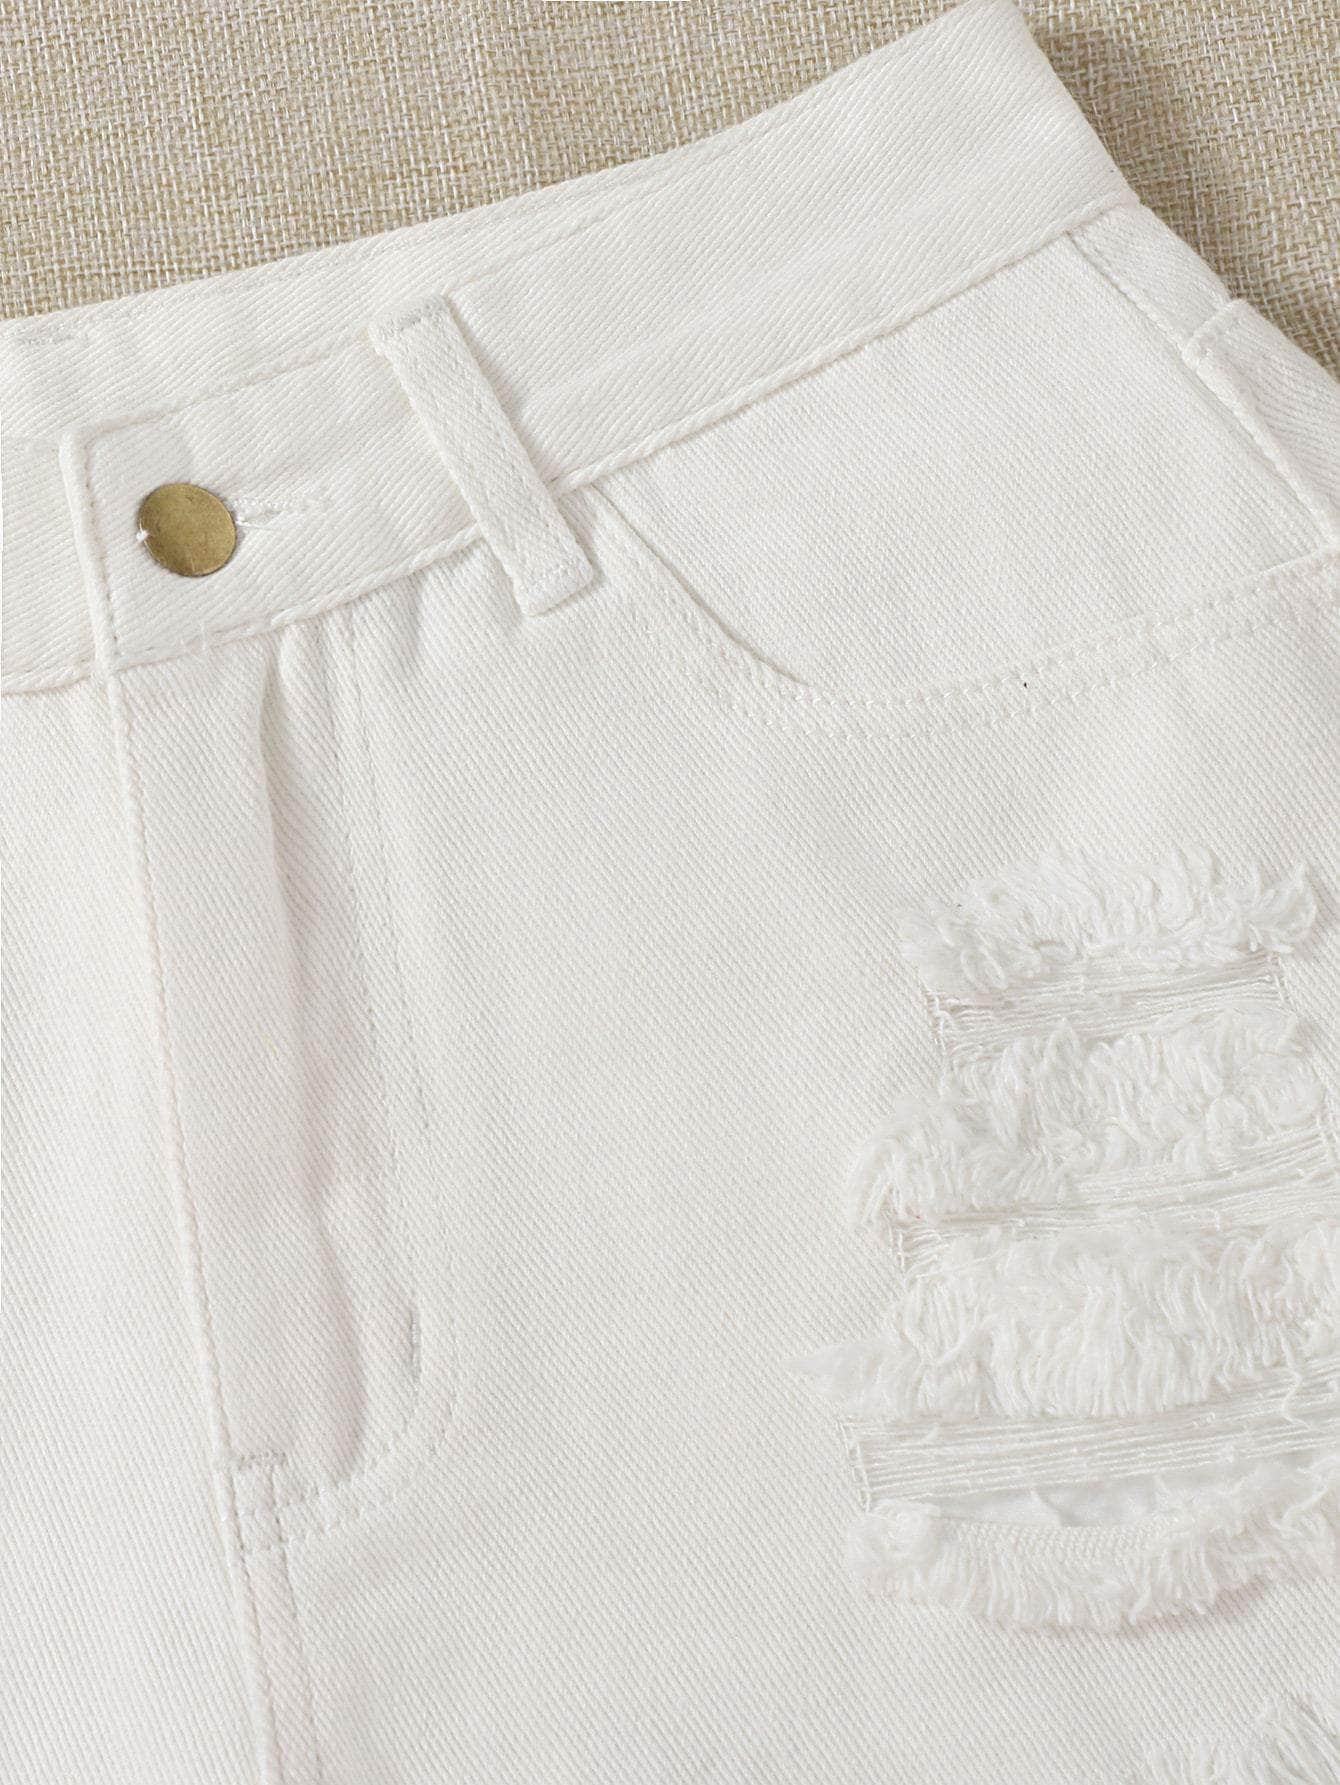 Blanco / XL Shorts jean rotos bajo crudo